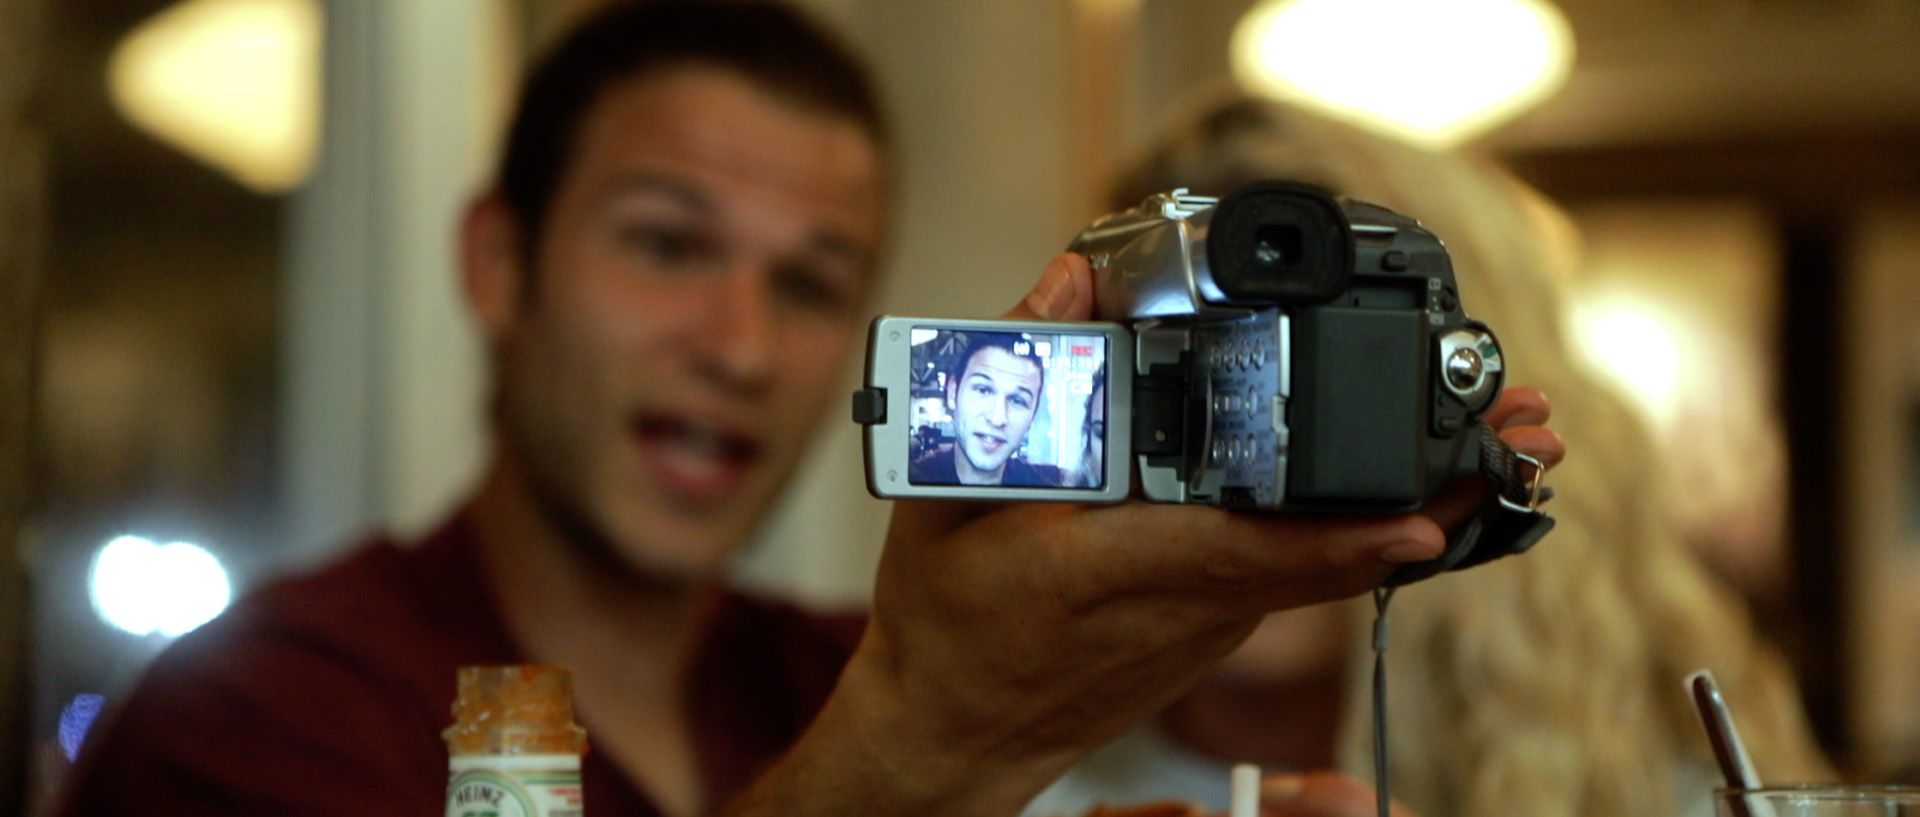 A still of JJ holding a video camera.